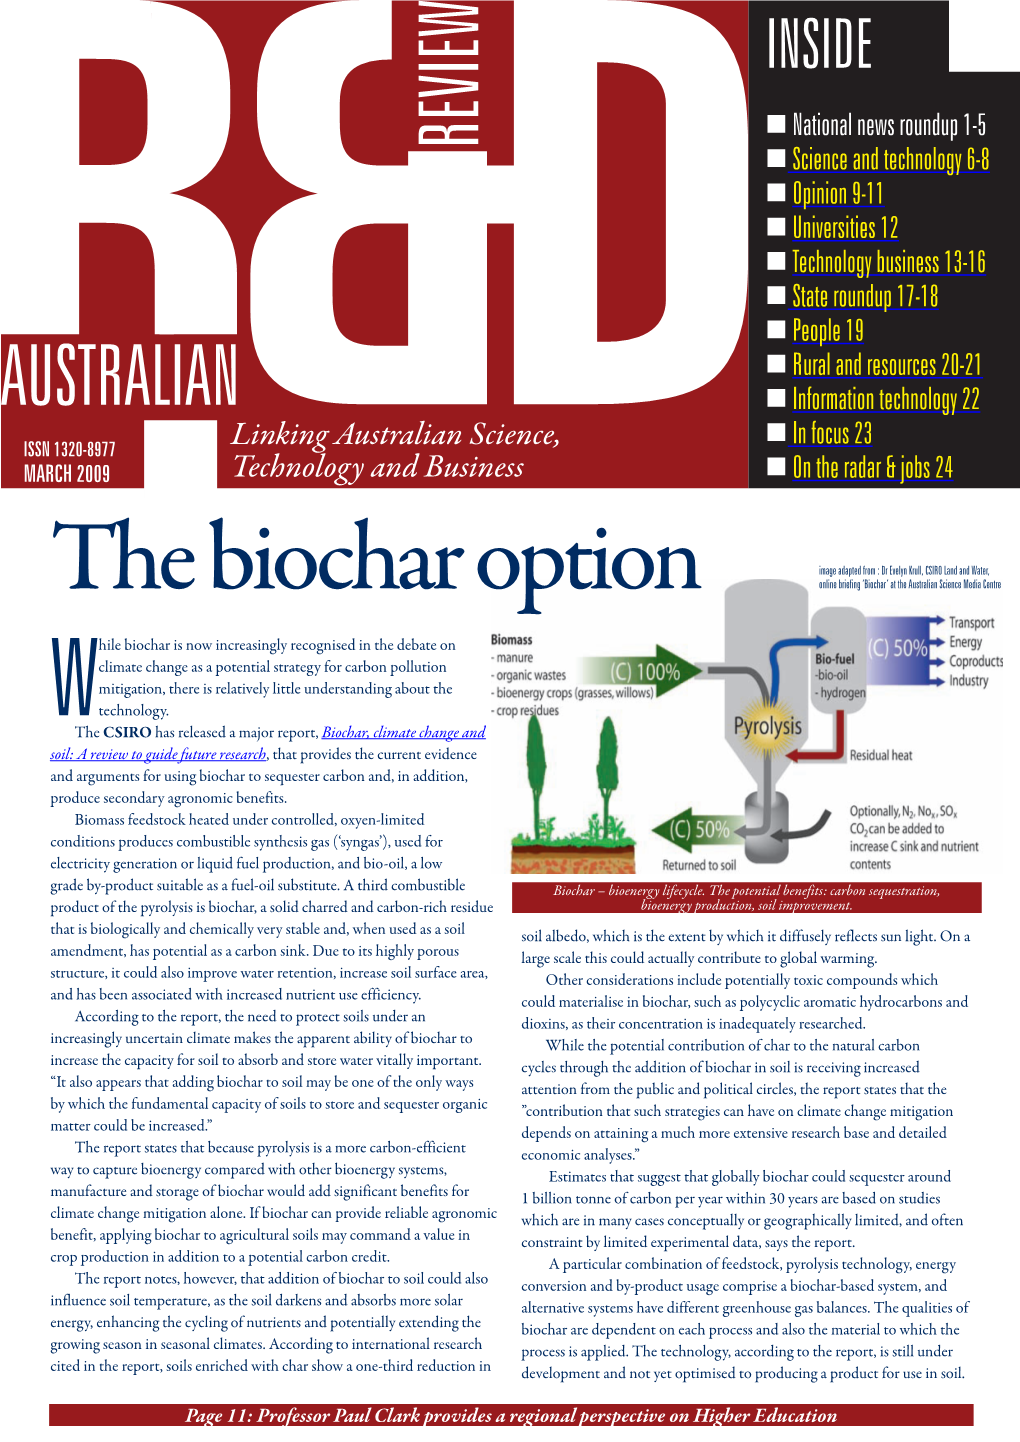 The Biochar Option Online Briefing ‘Biochar’ at the Australian Science Media Centre